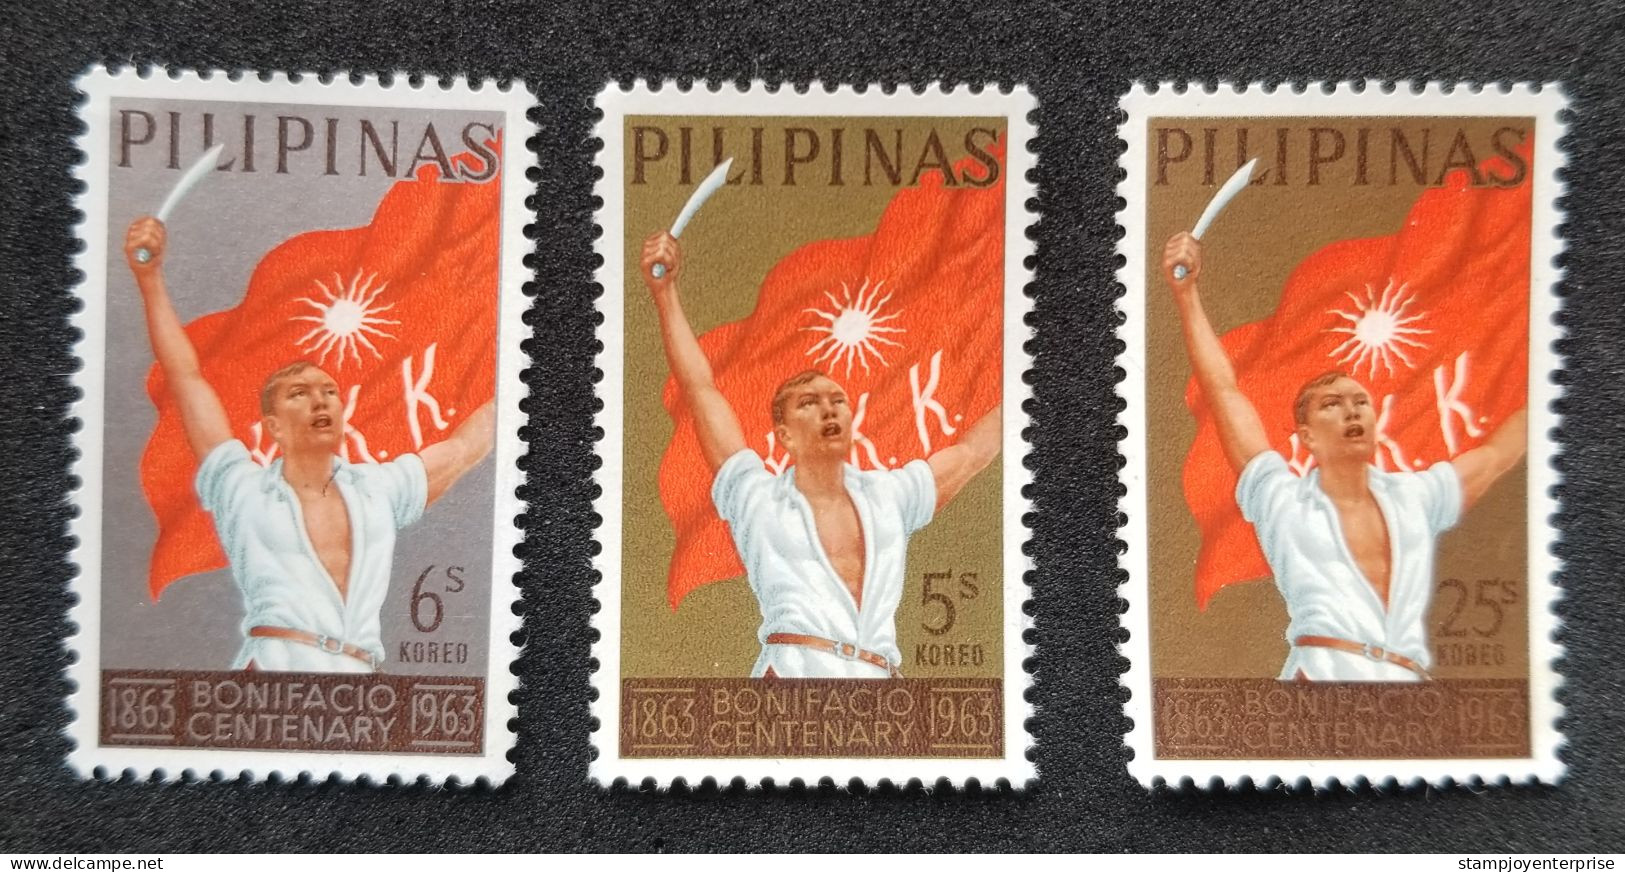 Philippines Centenary The Birth Of Andres Bonifacio 1963 (stamp) MNH - Philippinen